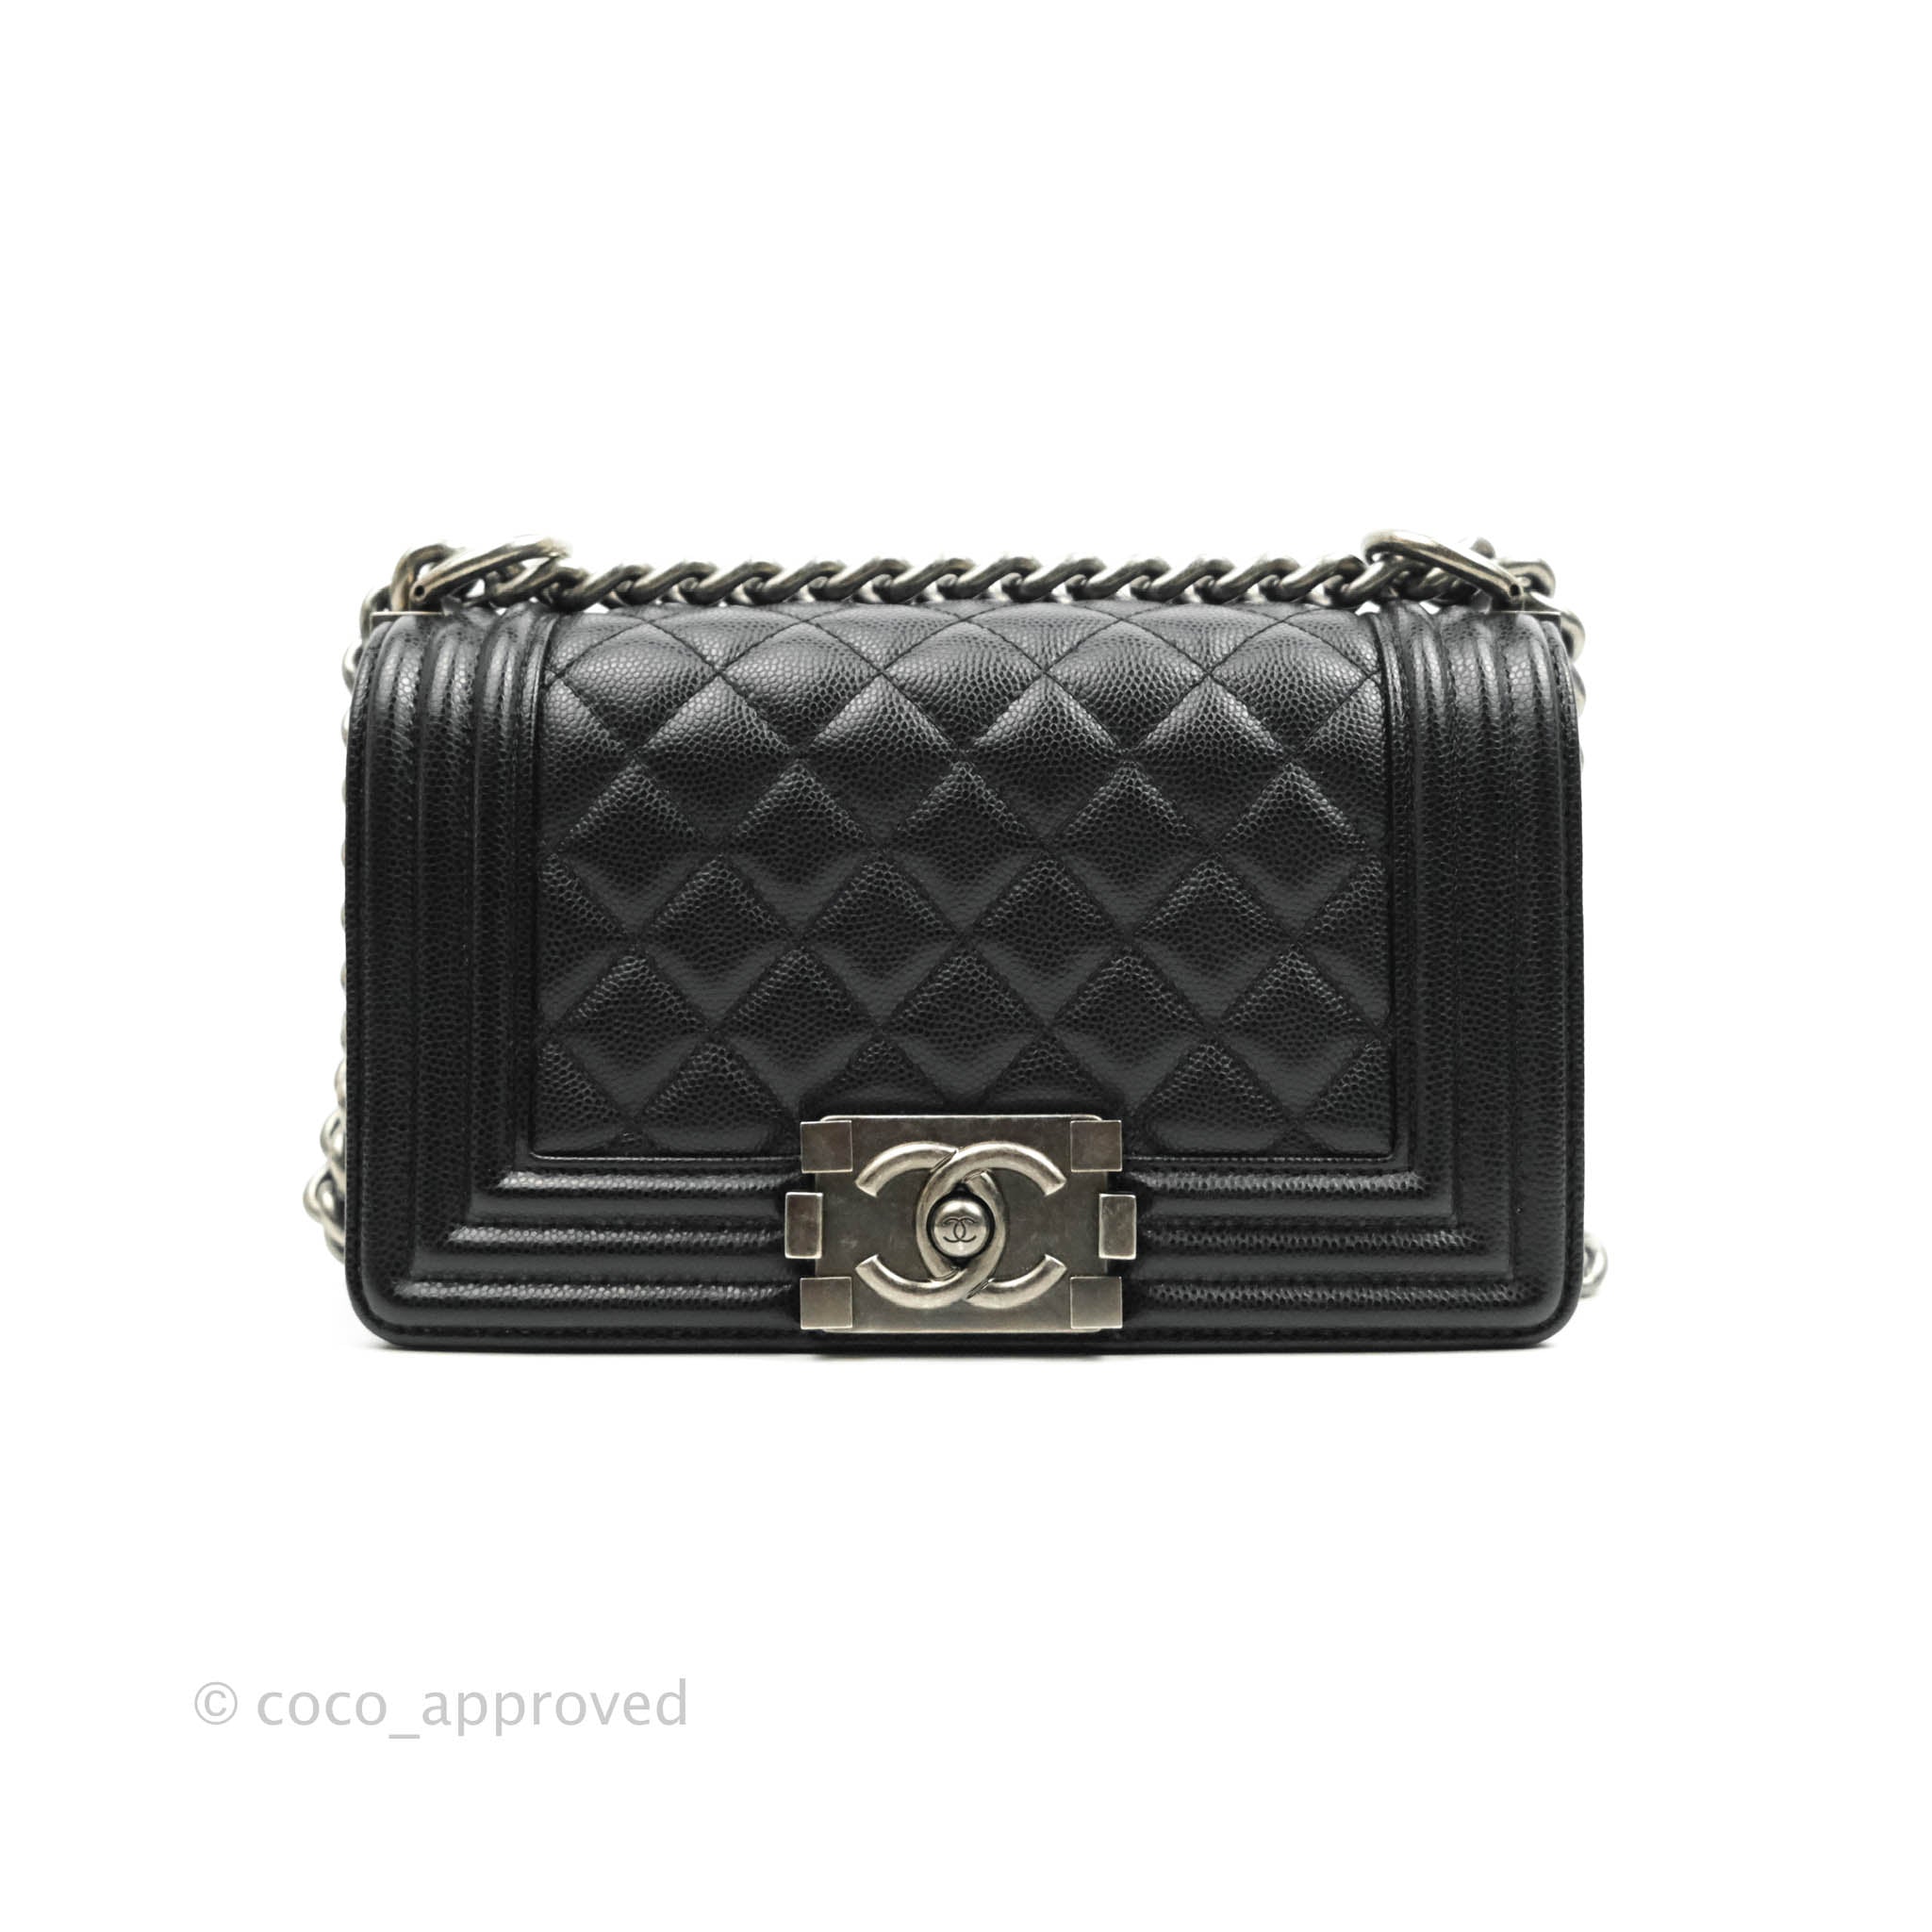 Chanel Small Boy bag of black caviar leather 